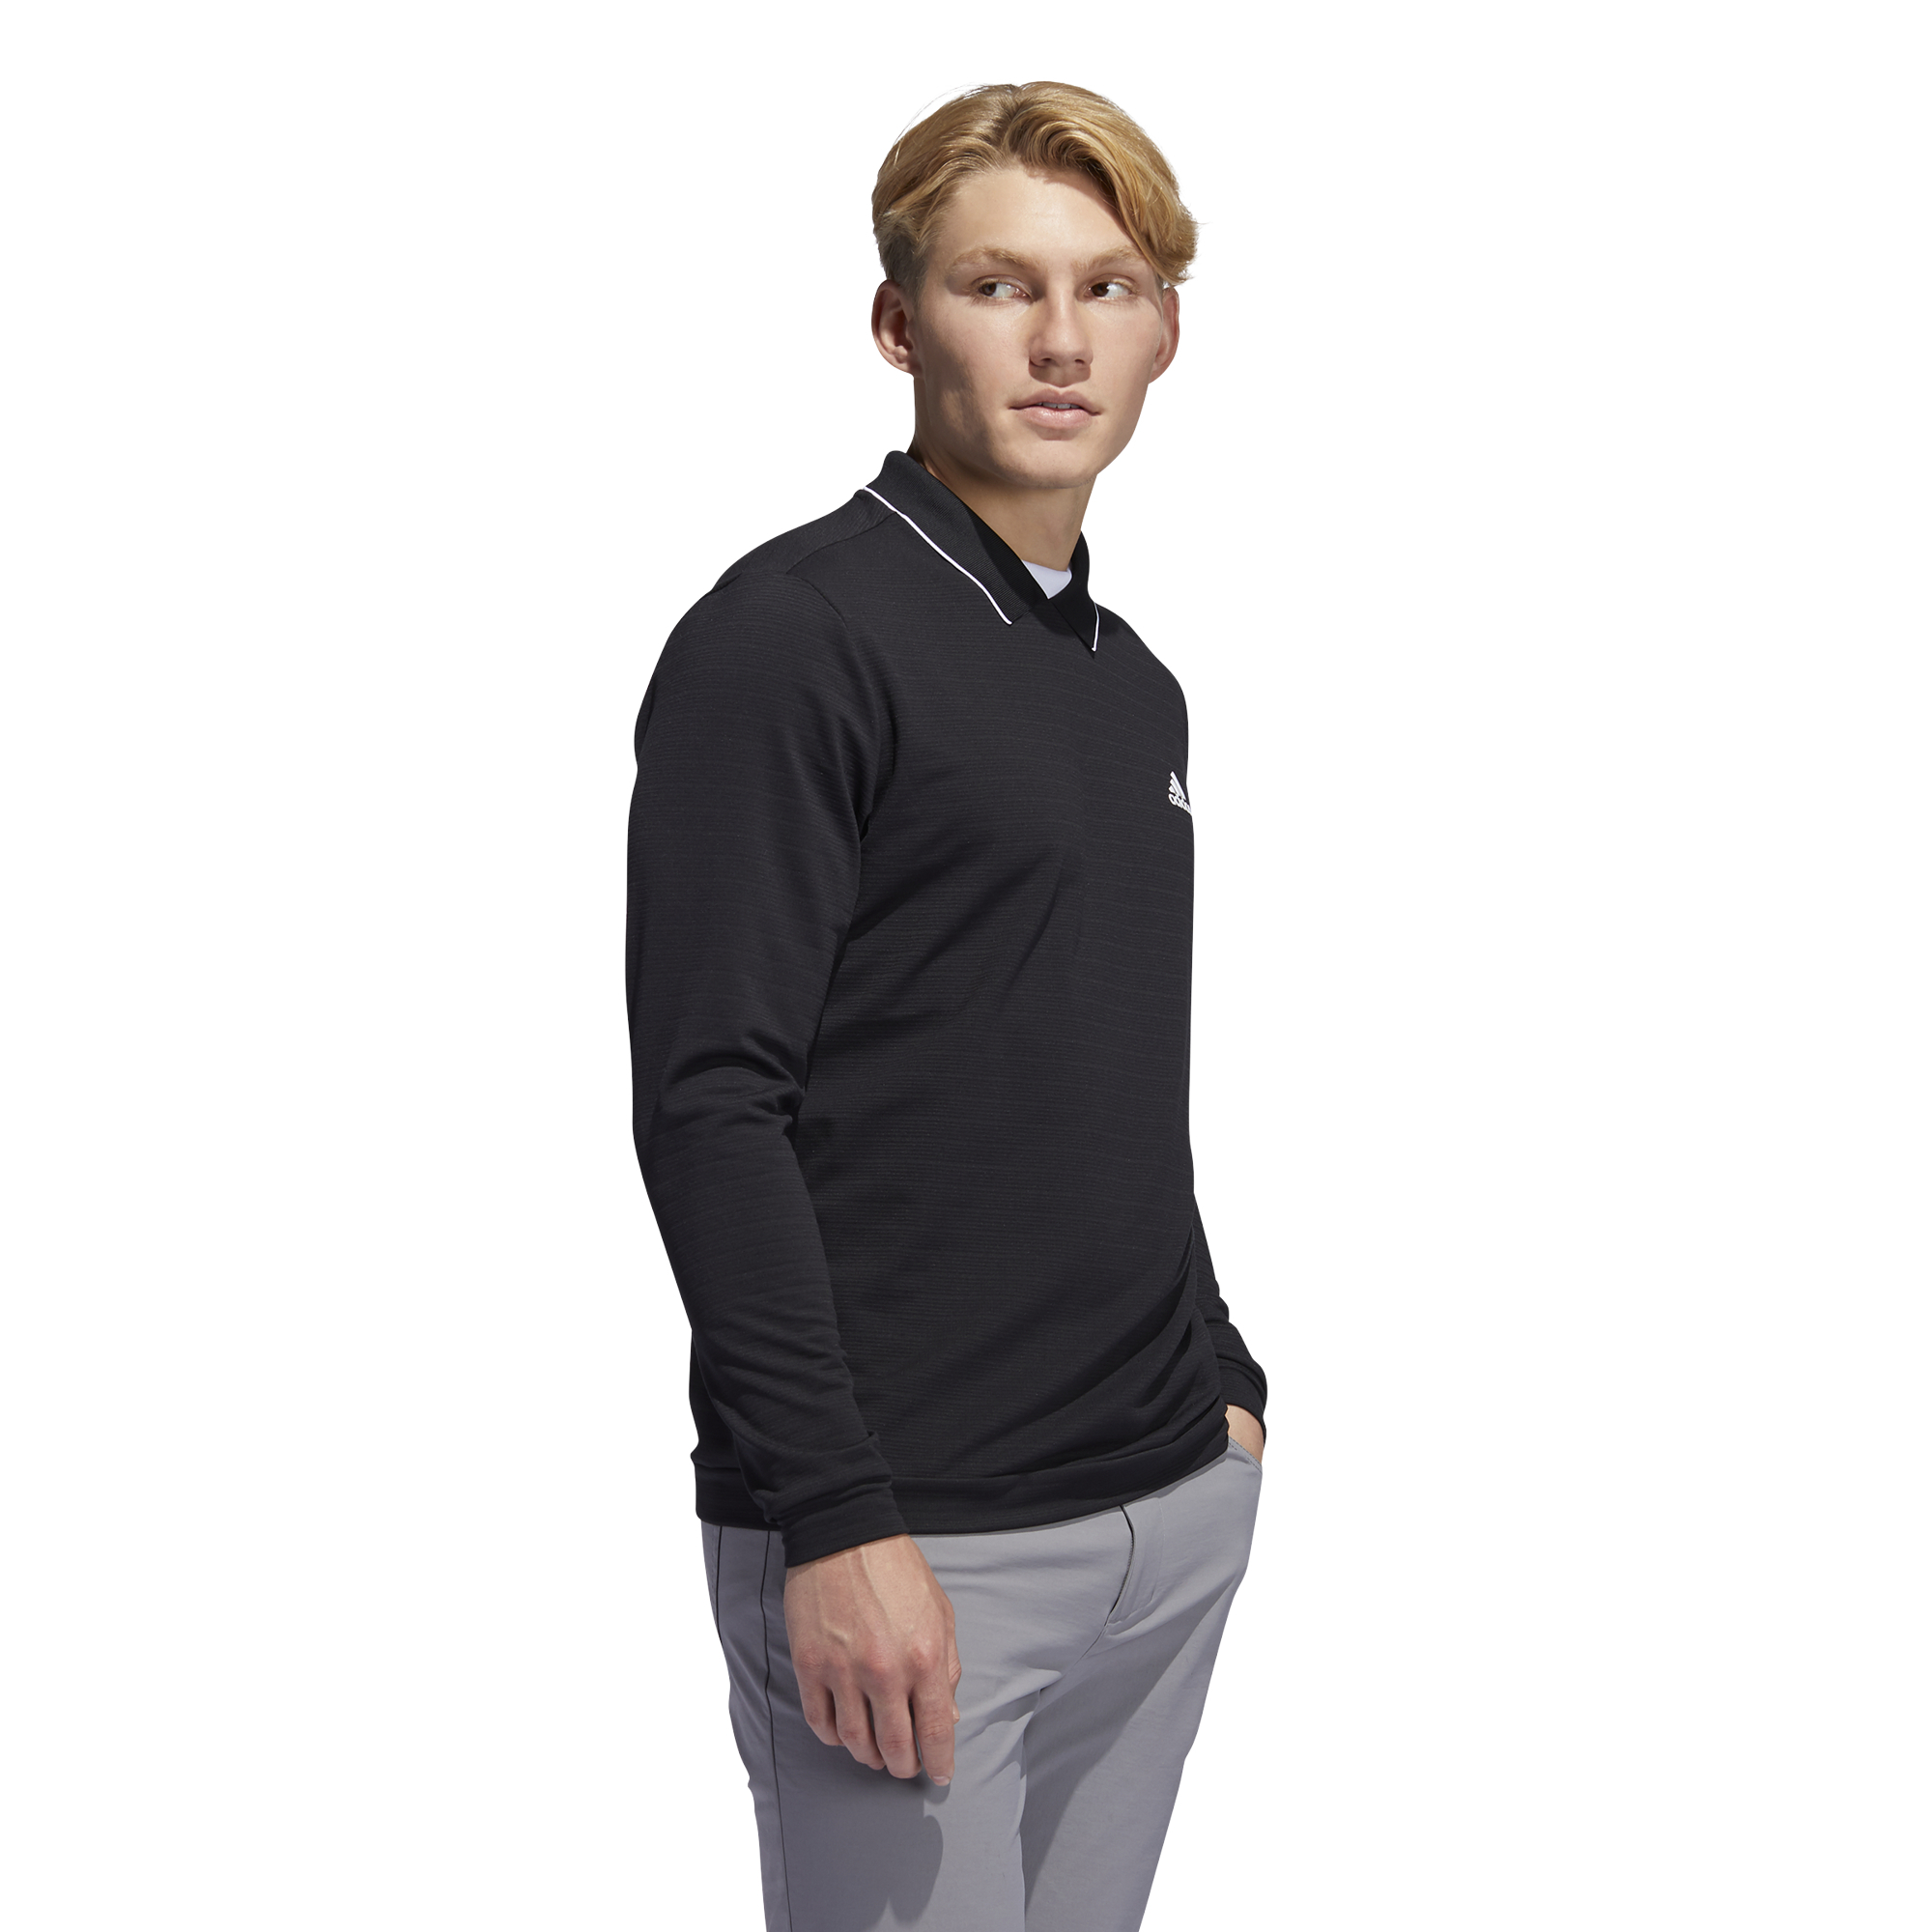 adidas Golf Thermal Primegreen Long Sleeve Polo Shirt 